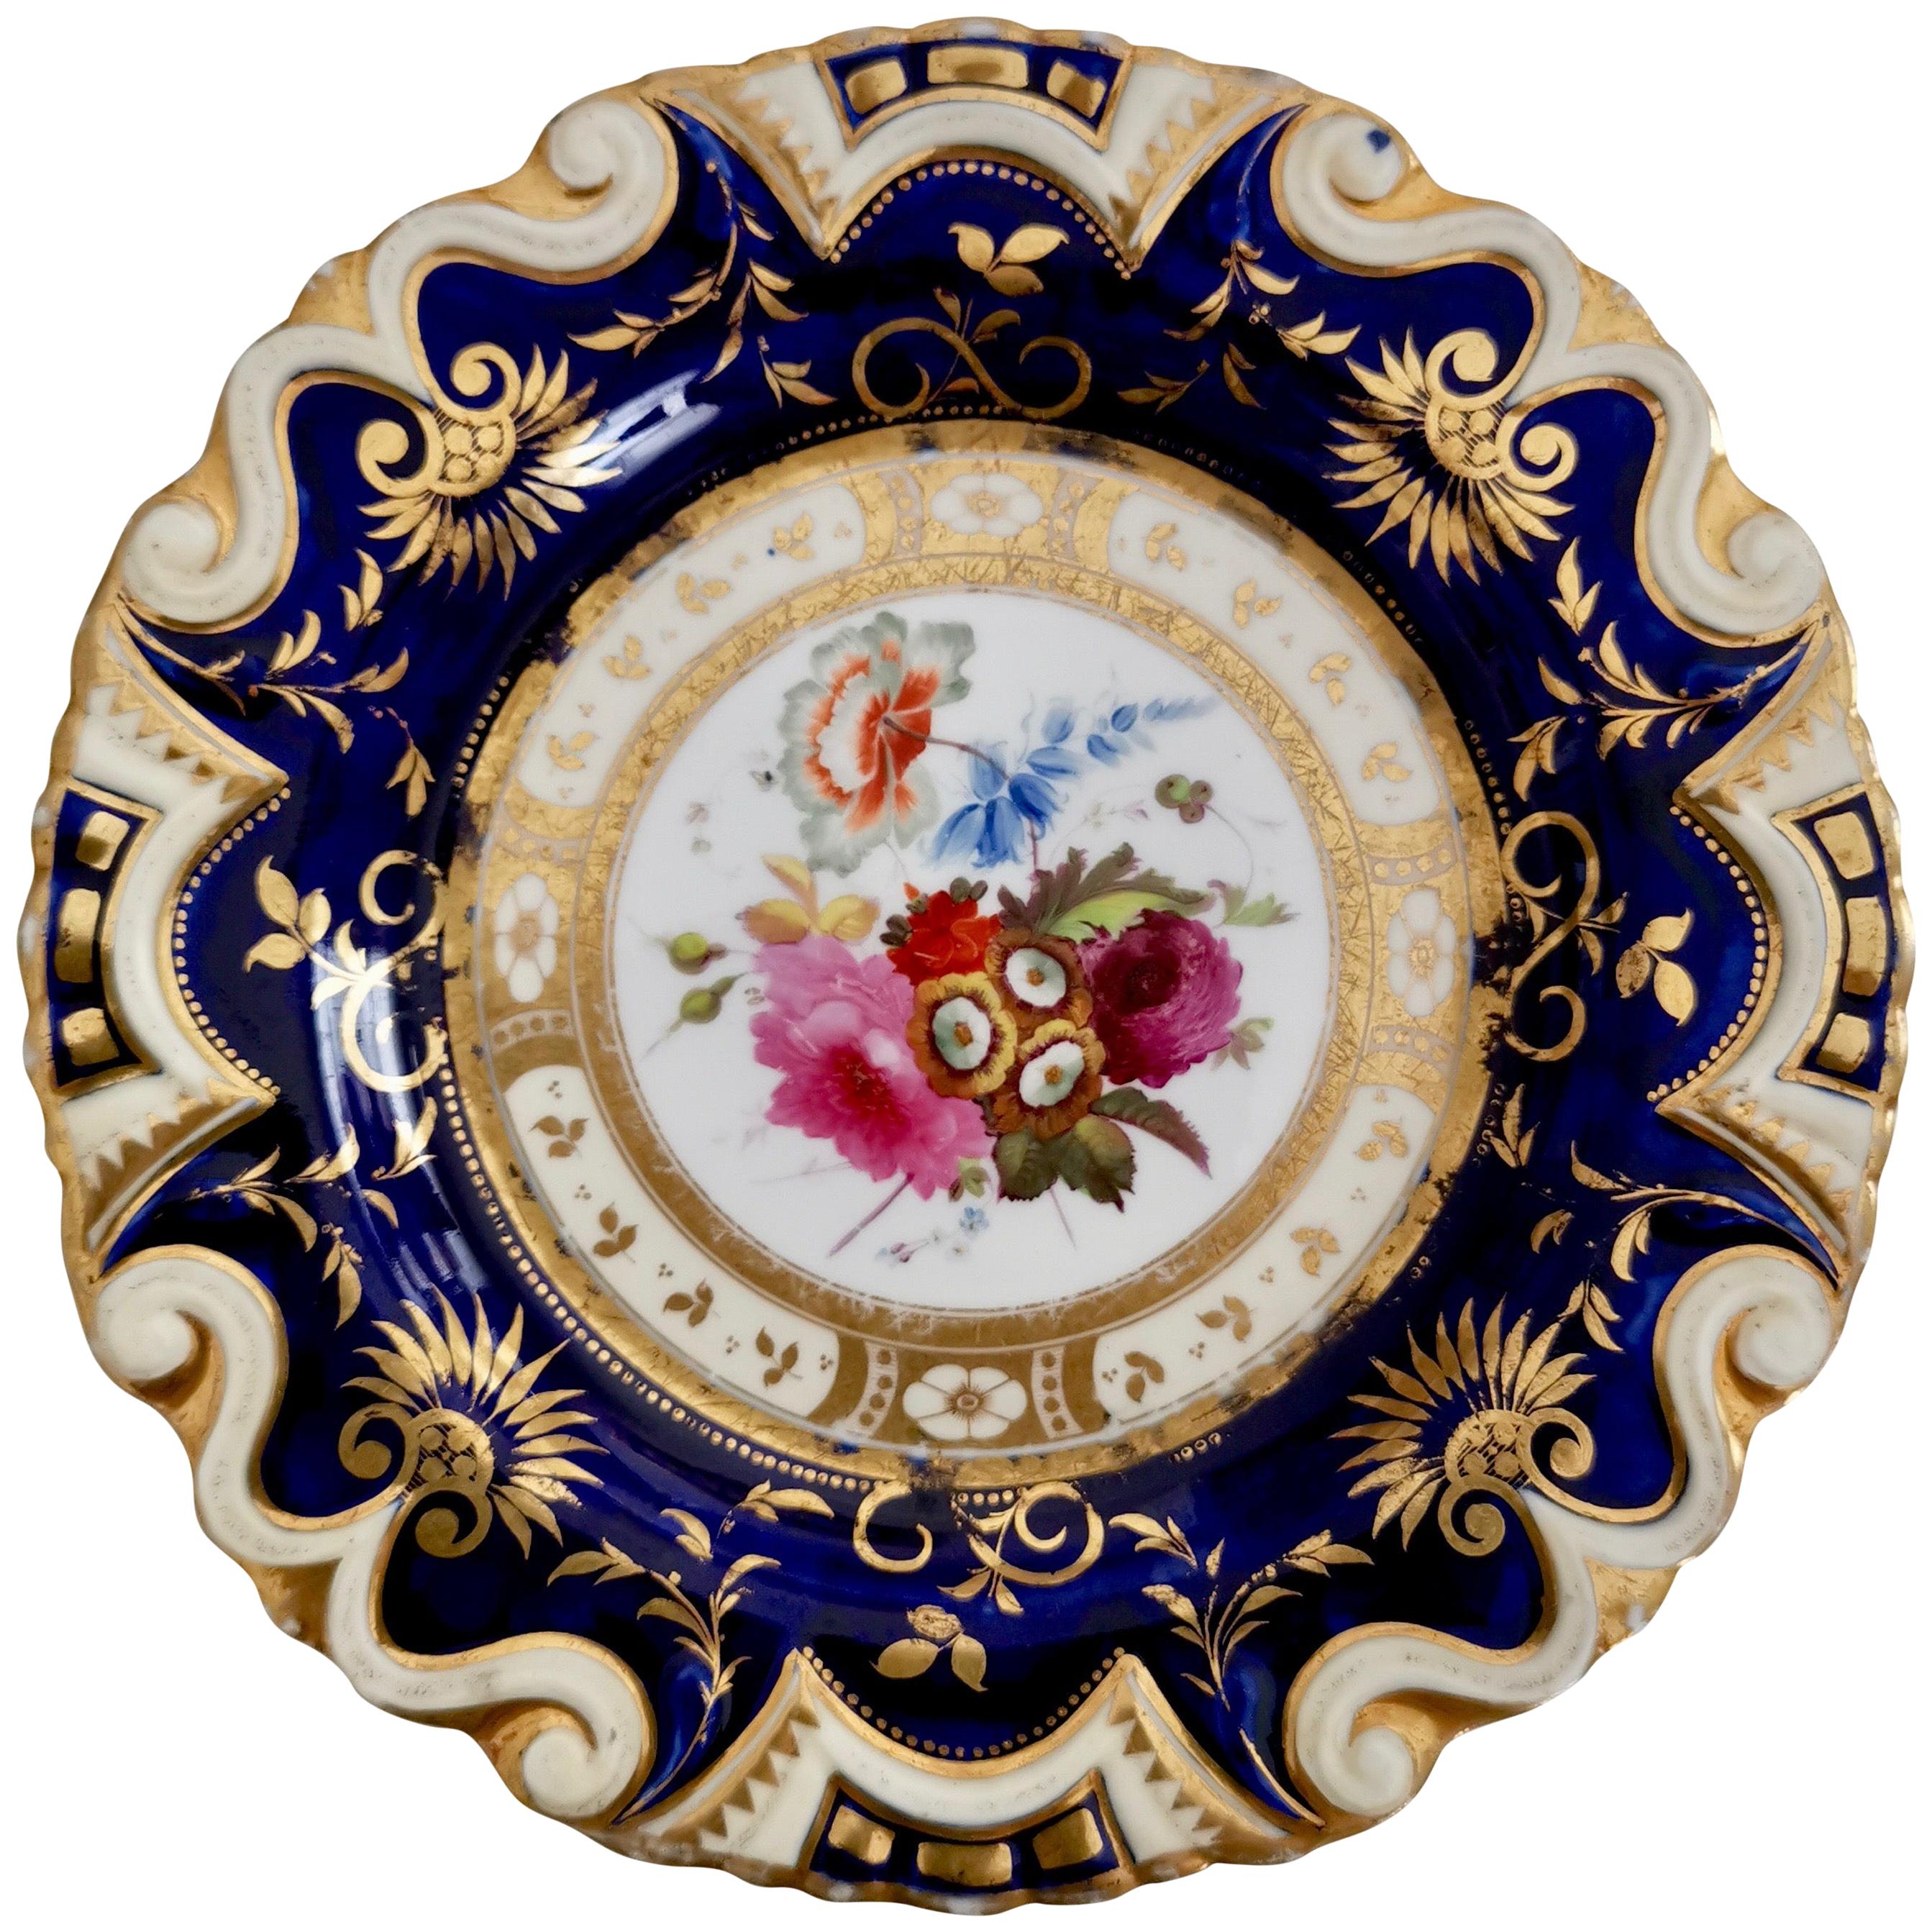 Ridgway Porcelain Plate, Cobalt Blue, Gilt, Flowers, Moustache, Regency